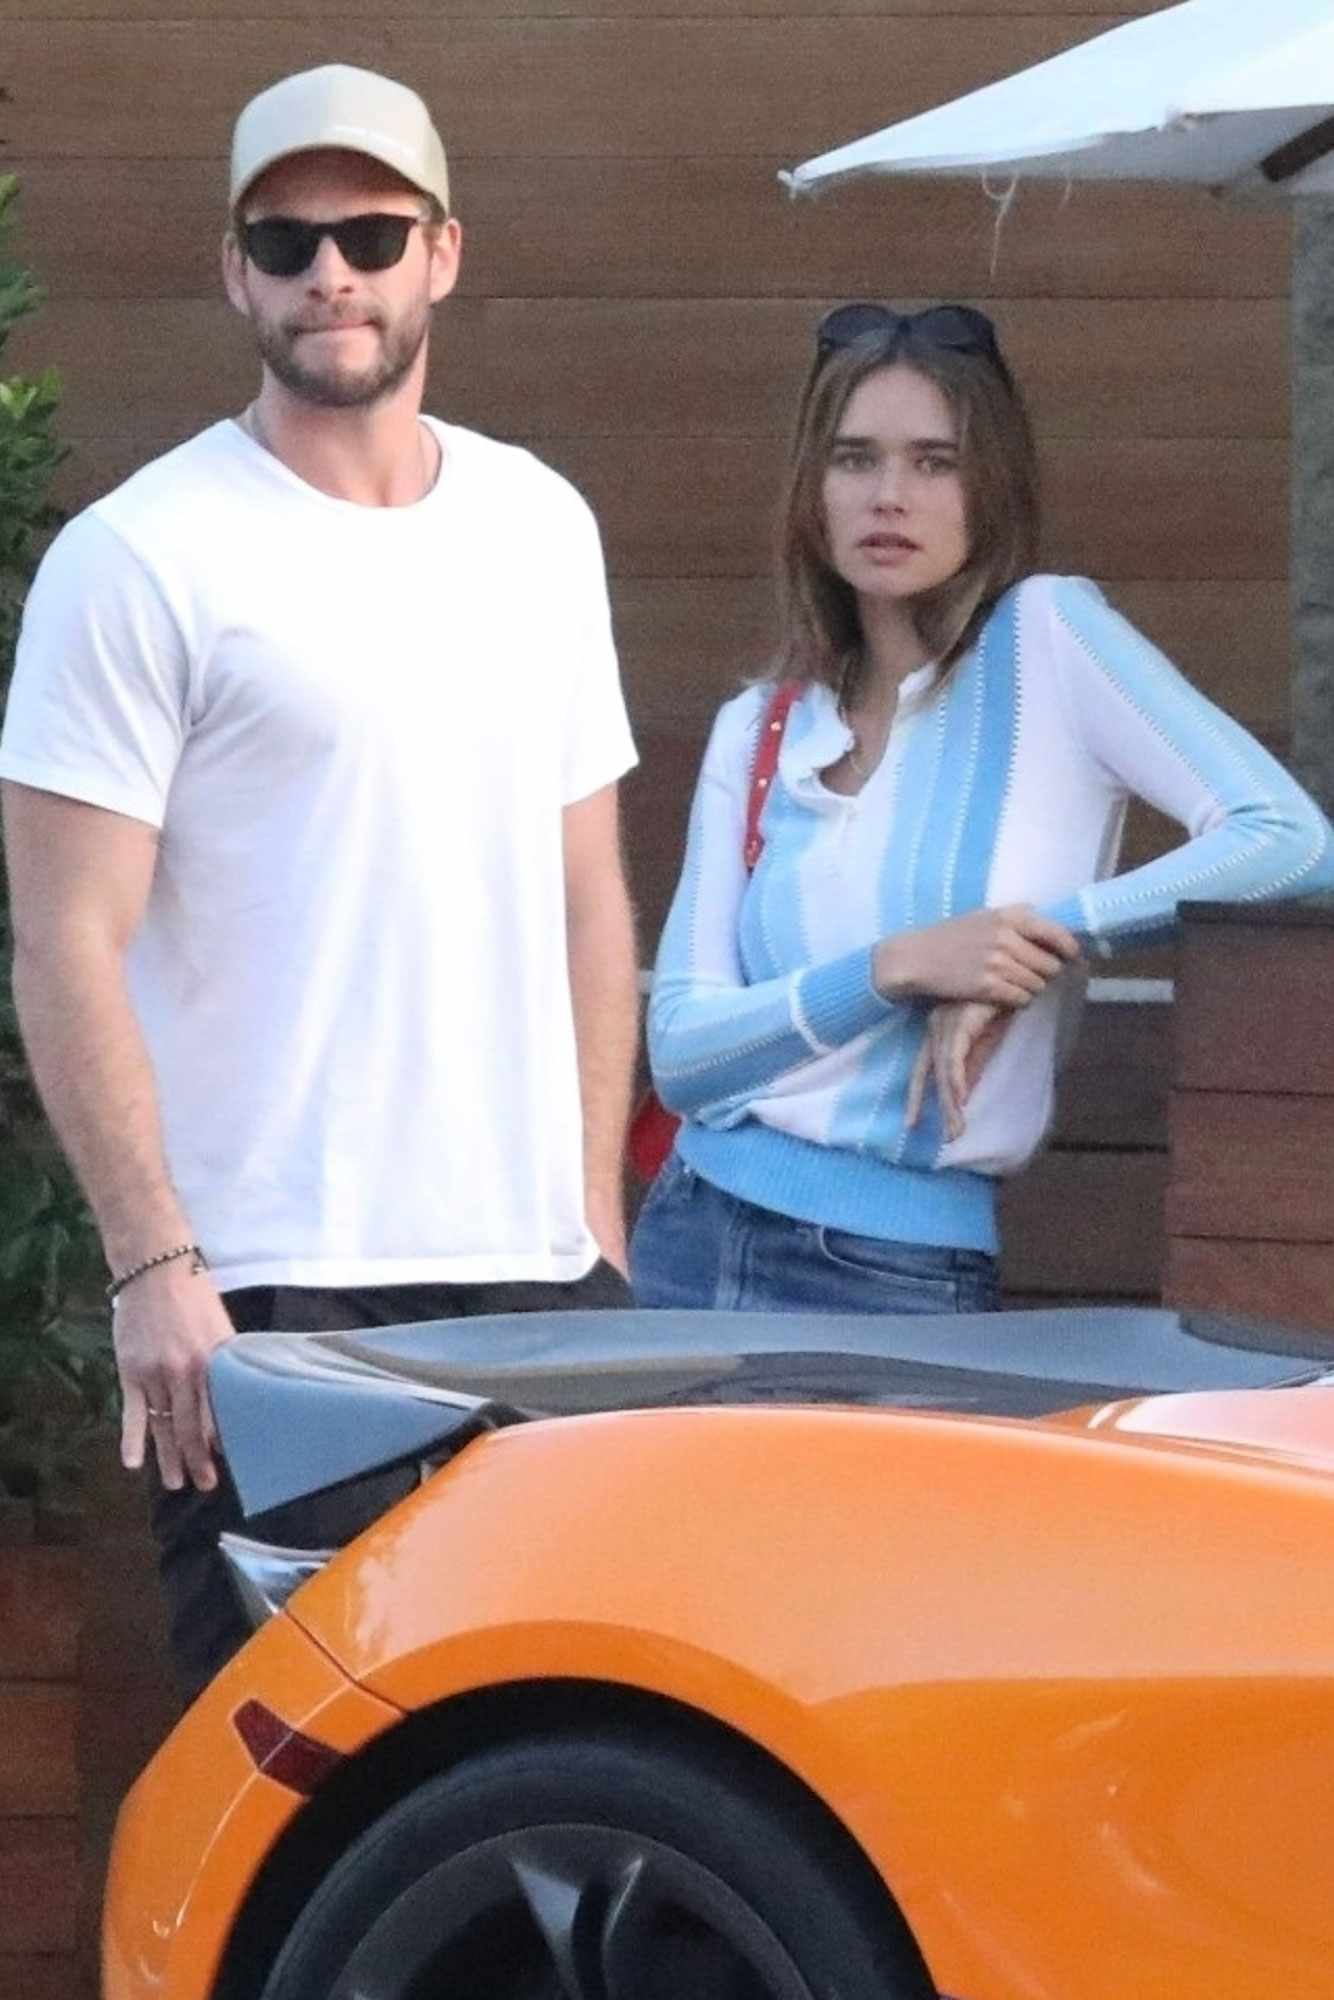 Liam Hemsworth and his new girlfriend Gabriella Brooks